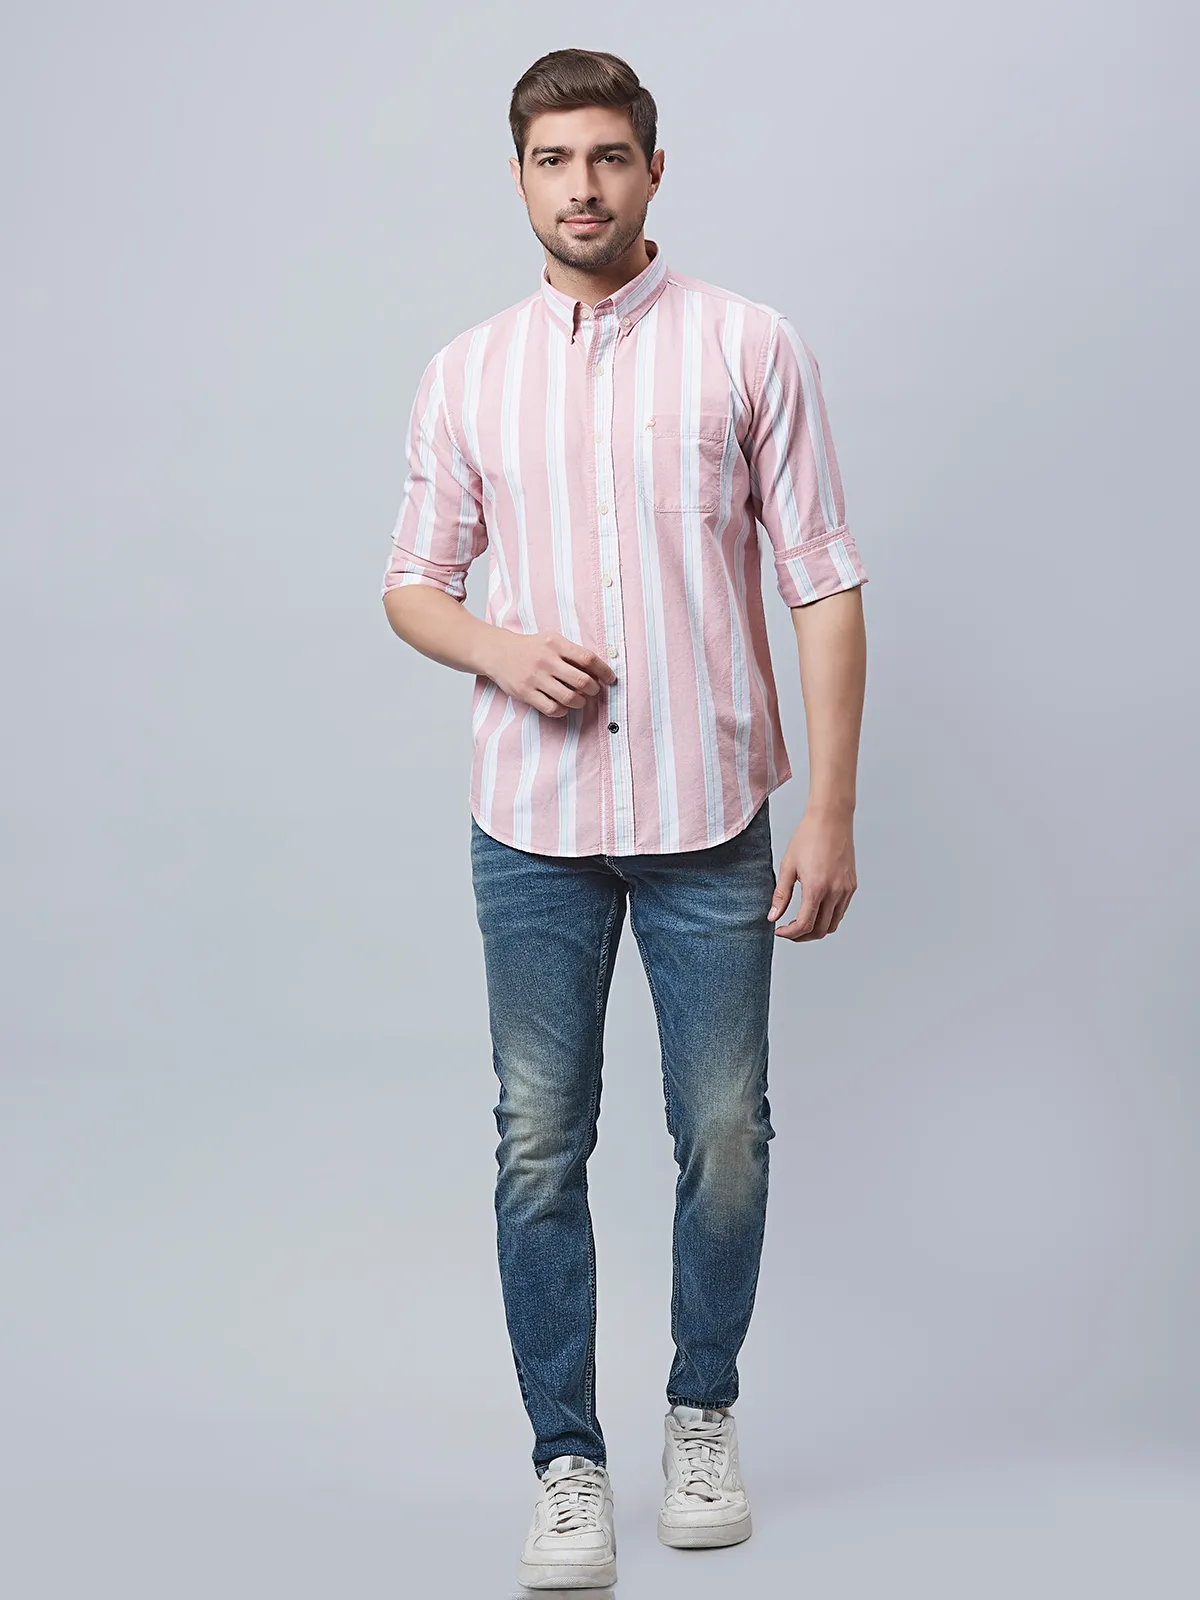 River Blue light pink shirt in stripe